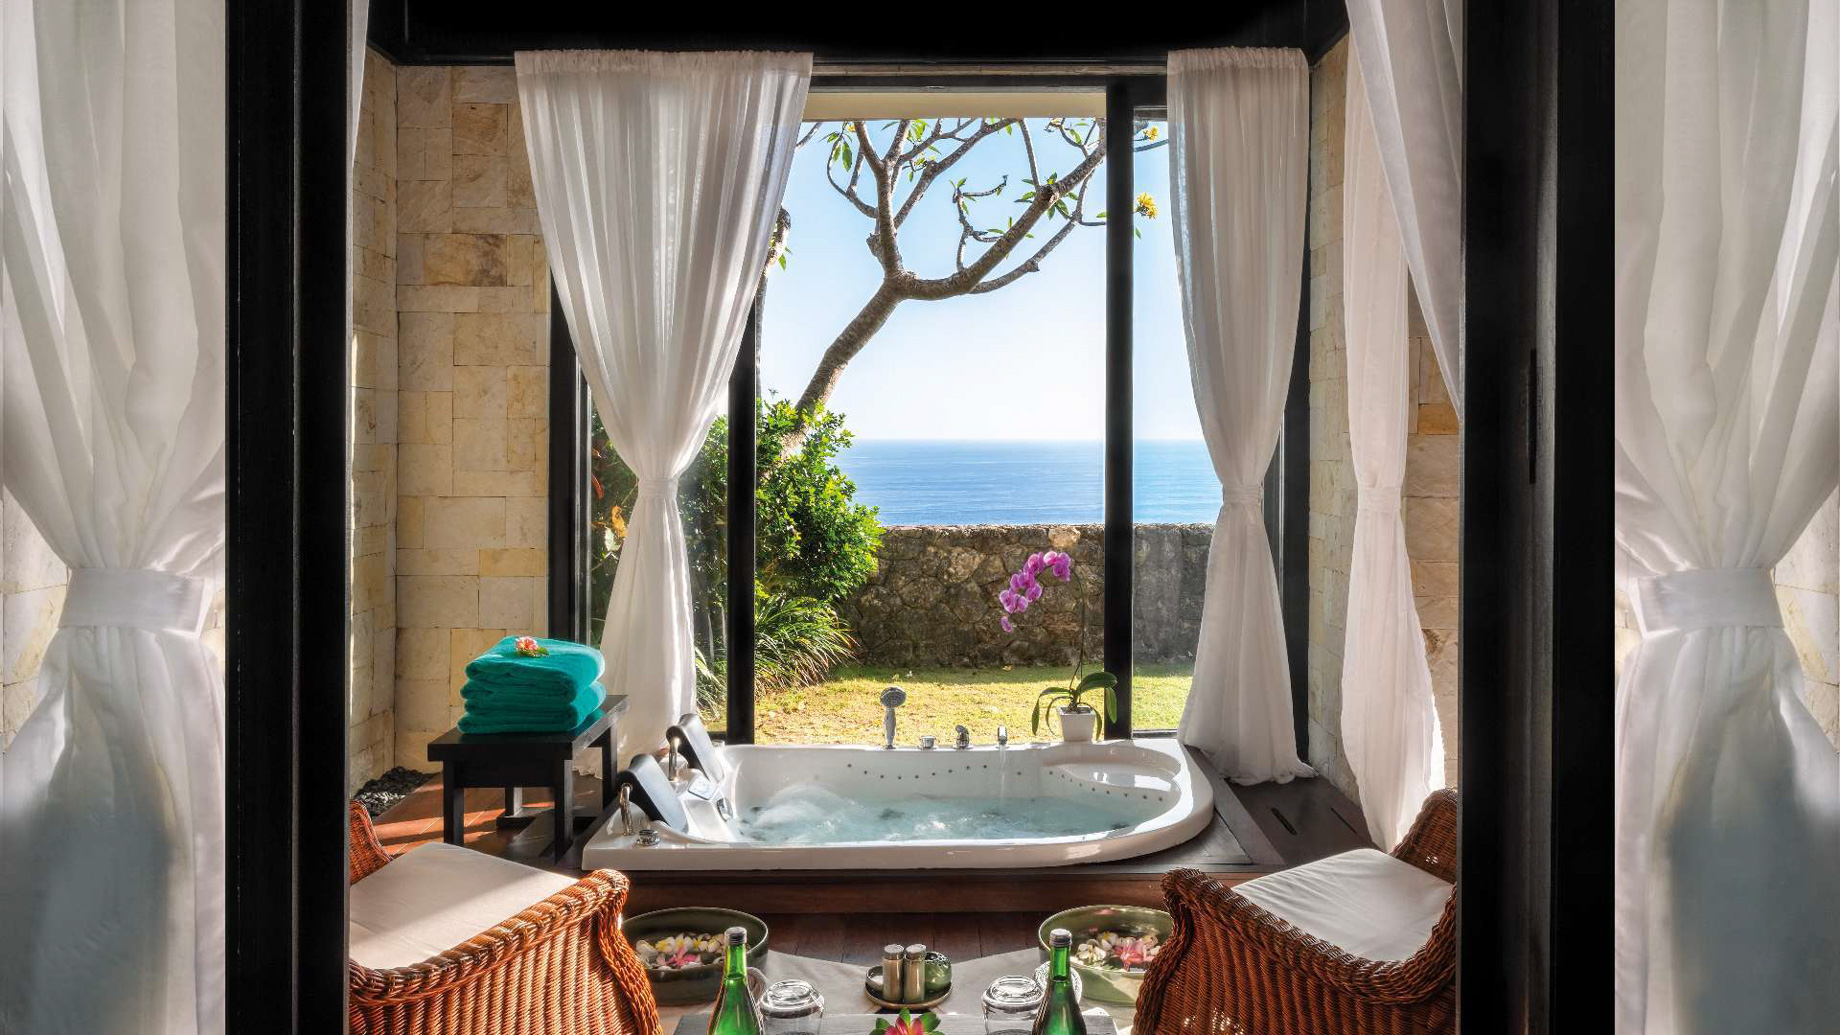 Bvlgari Resort Bali – Uluwatu, Bali, Indonesia – The Bvlgari Spa Ocean View Jacuzzi Room